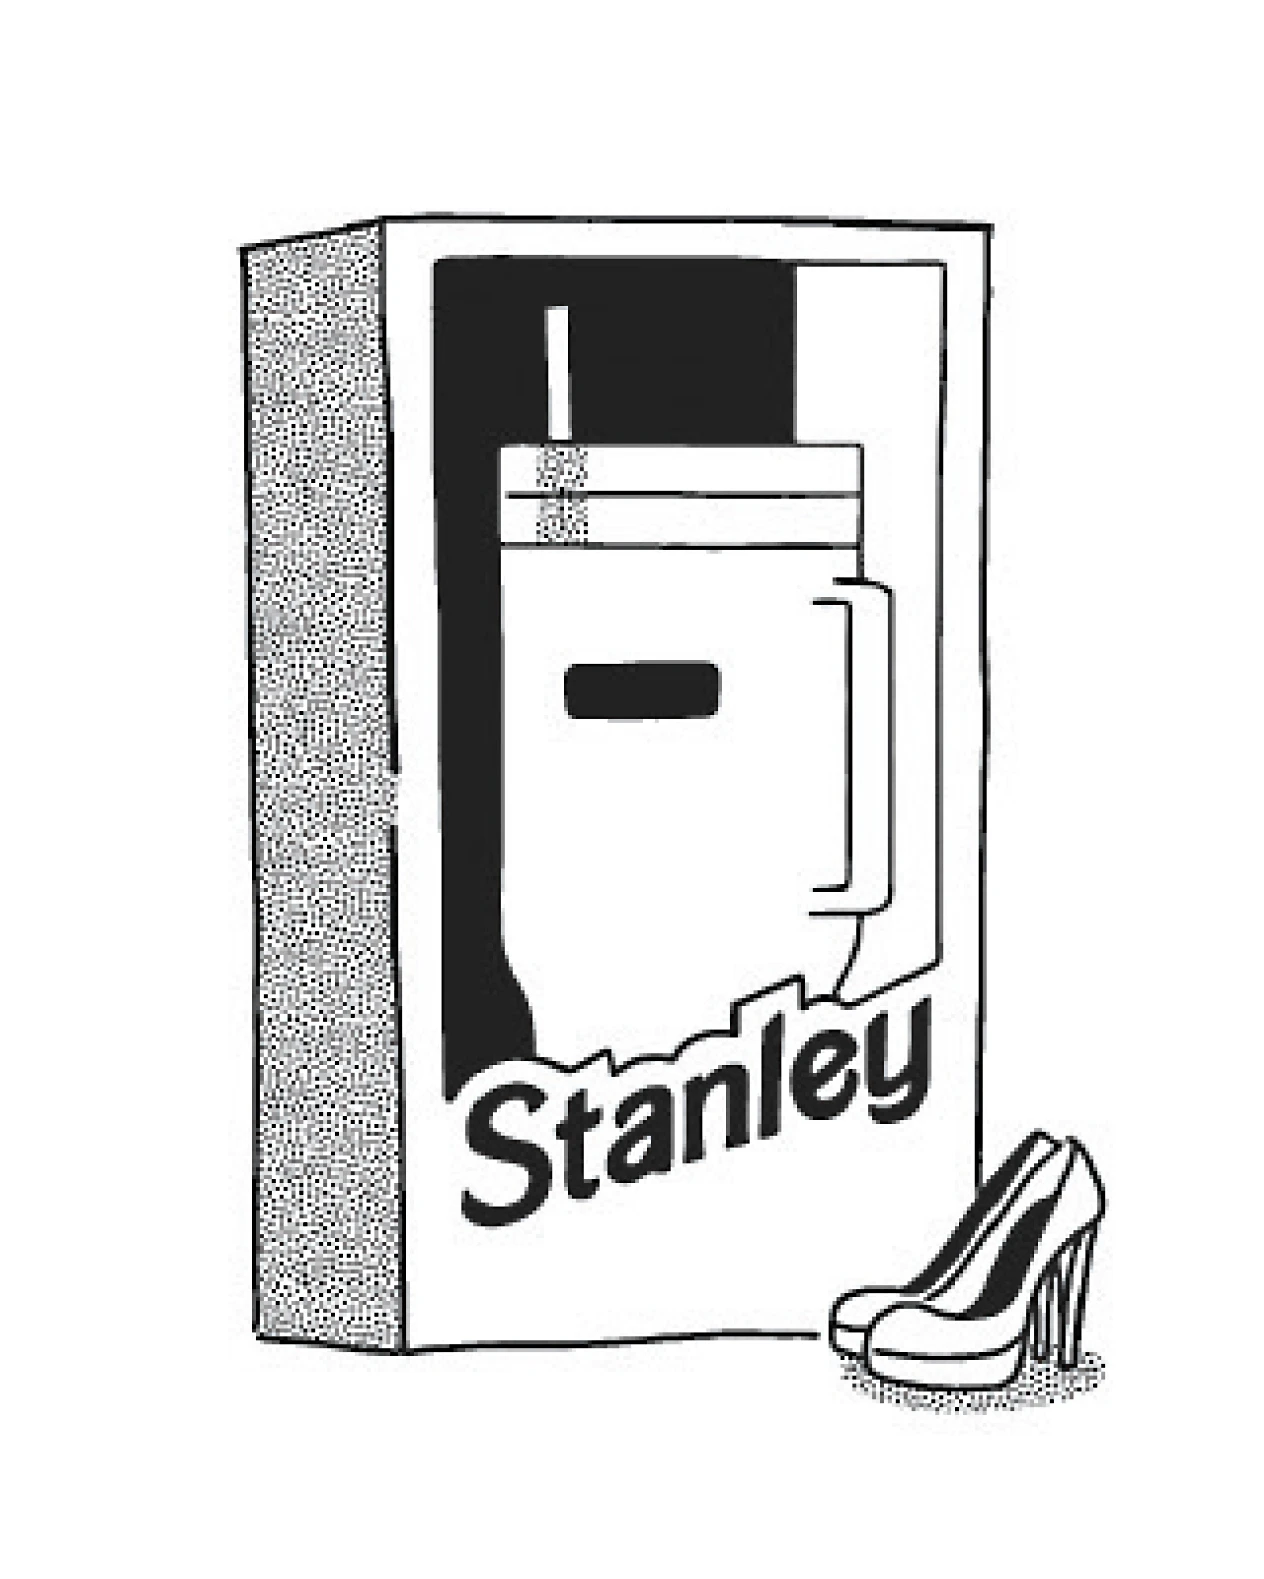 Stanley Favorites - The Buy Guide